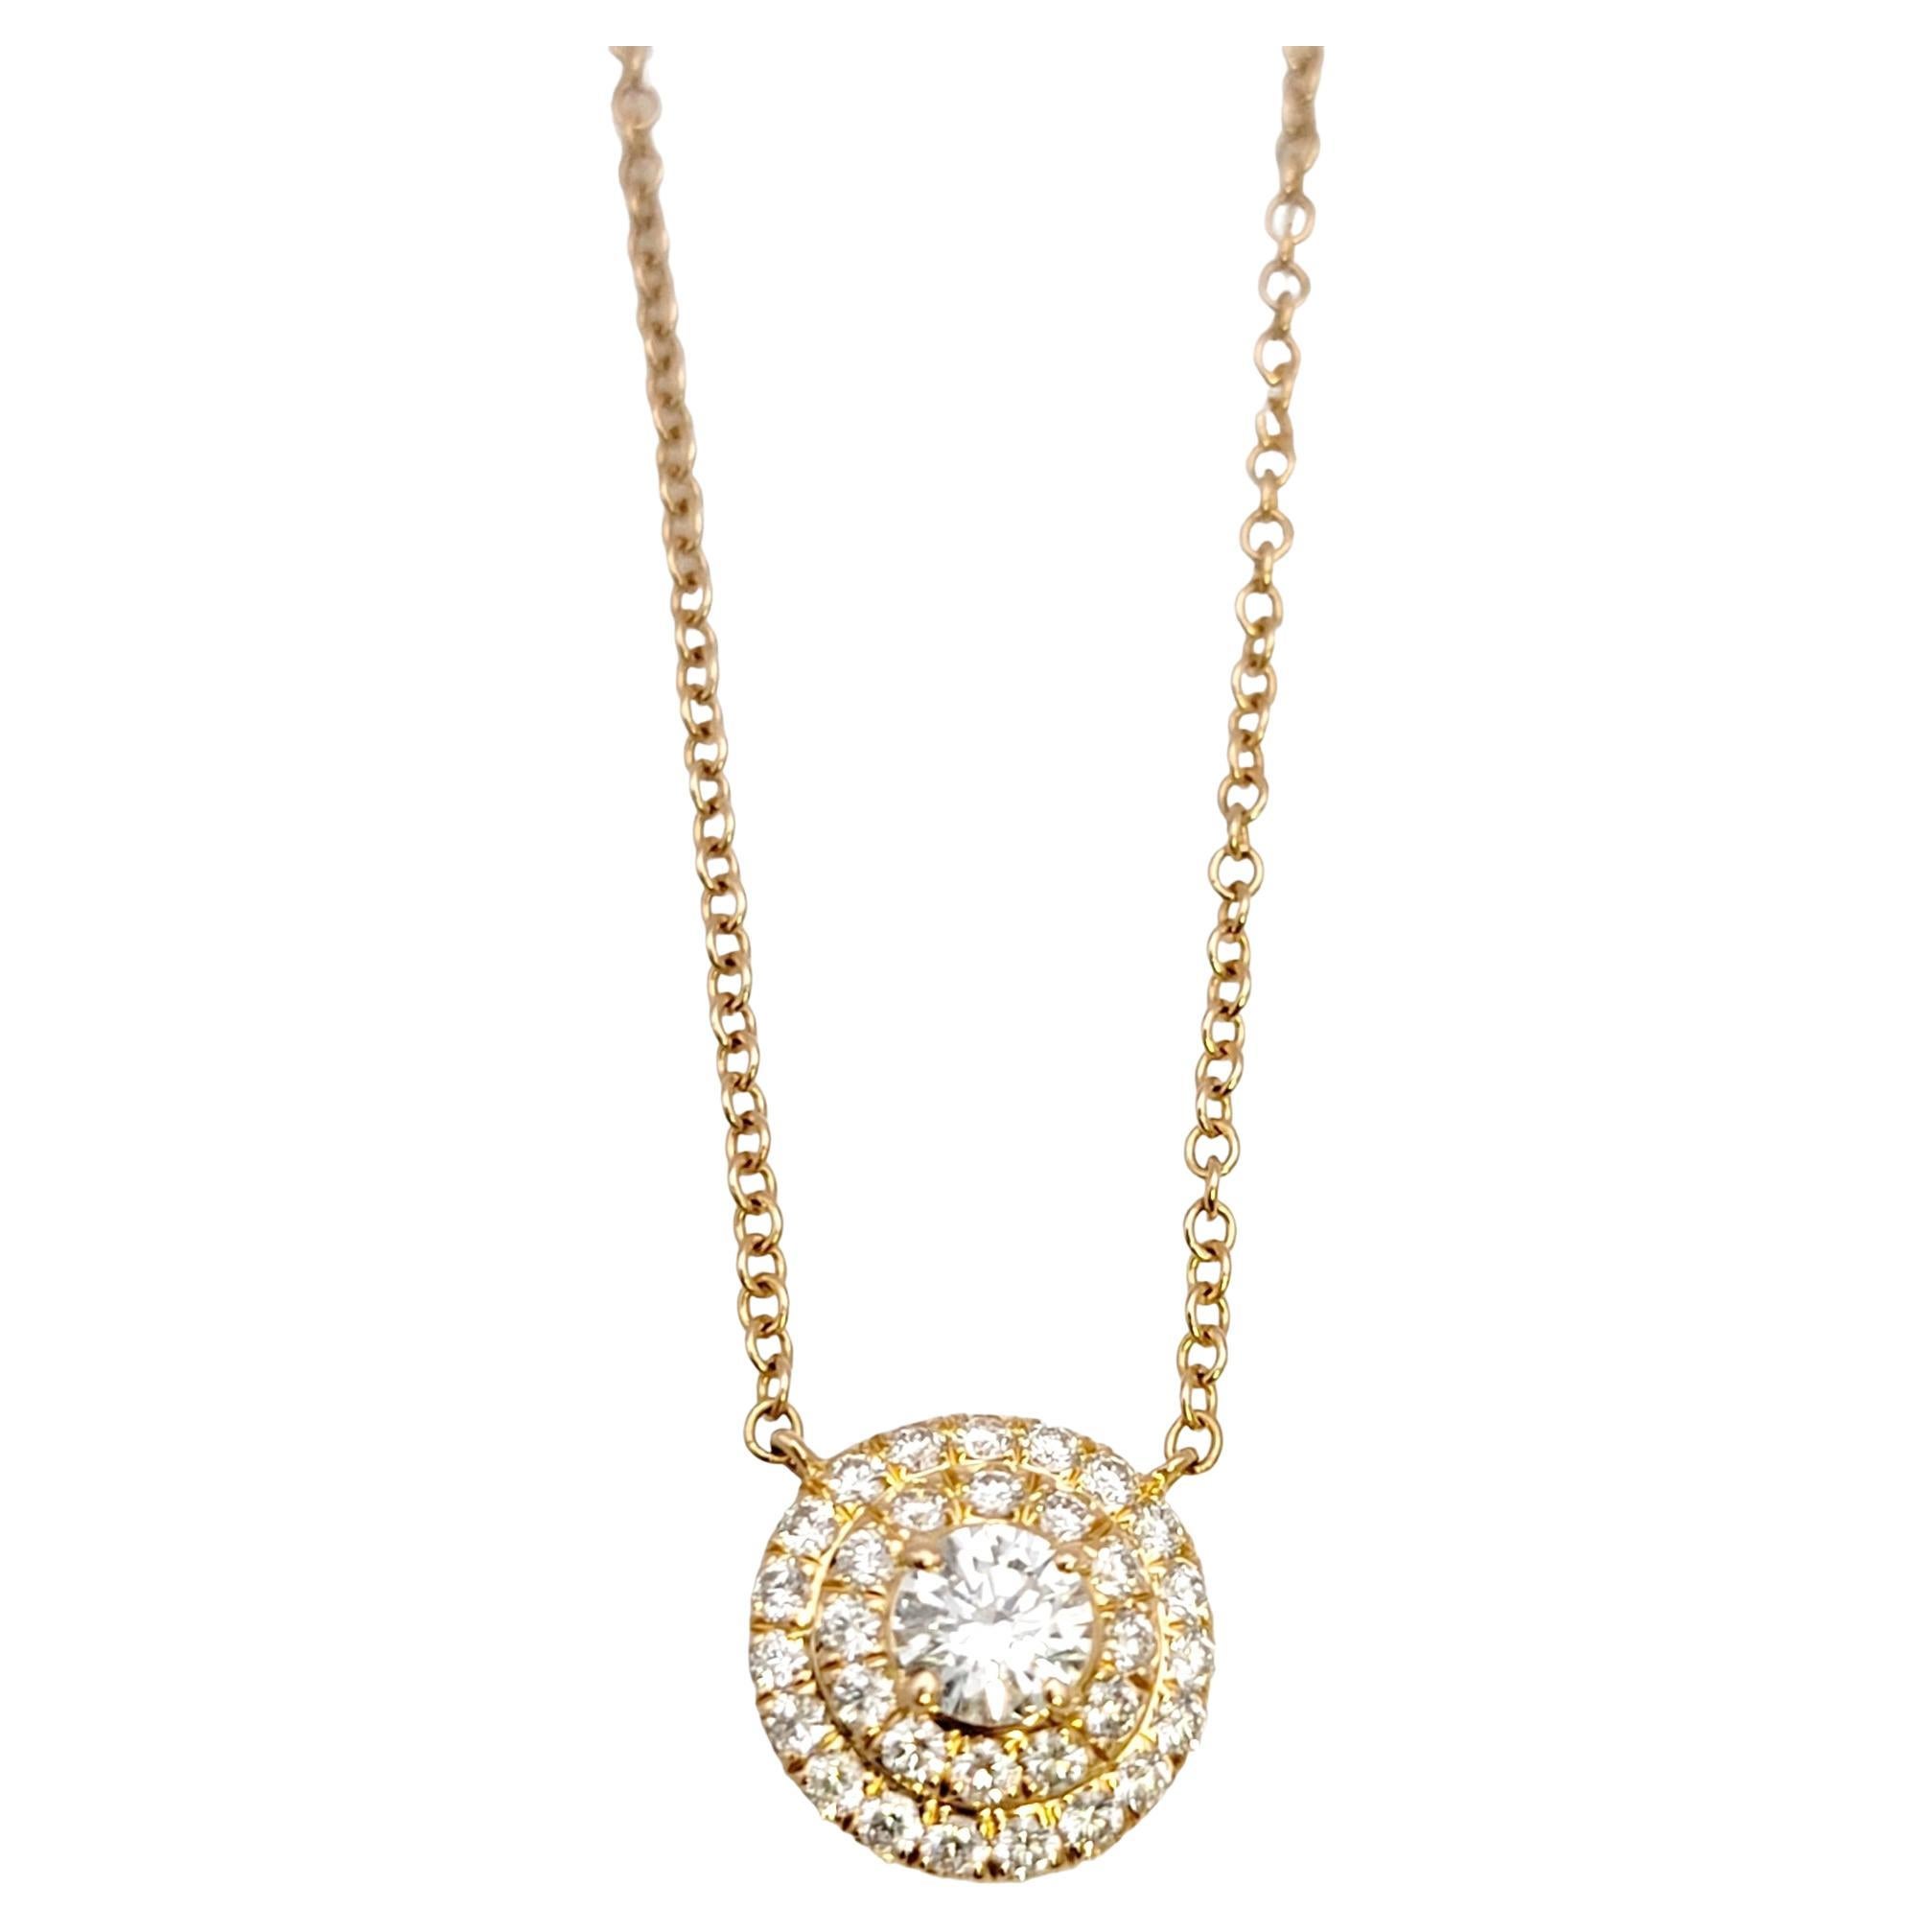 Tiffany & Co. Soleste Collier pendentif en or rose 18 carats avec halo de diamants ronds